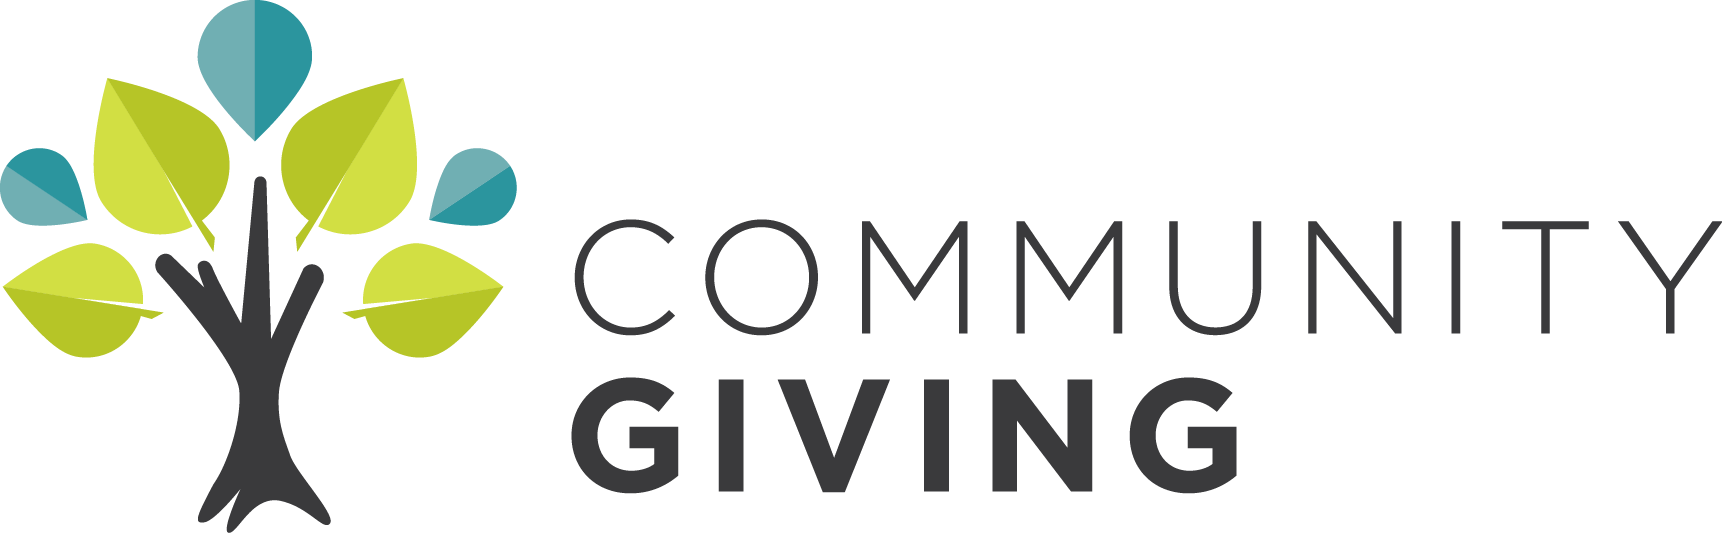 Community Giving logo